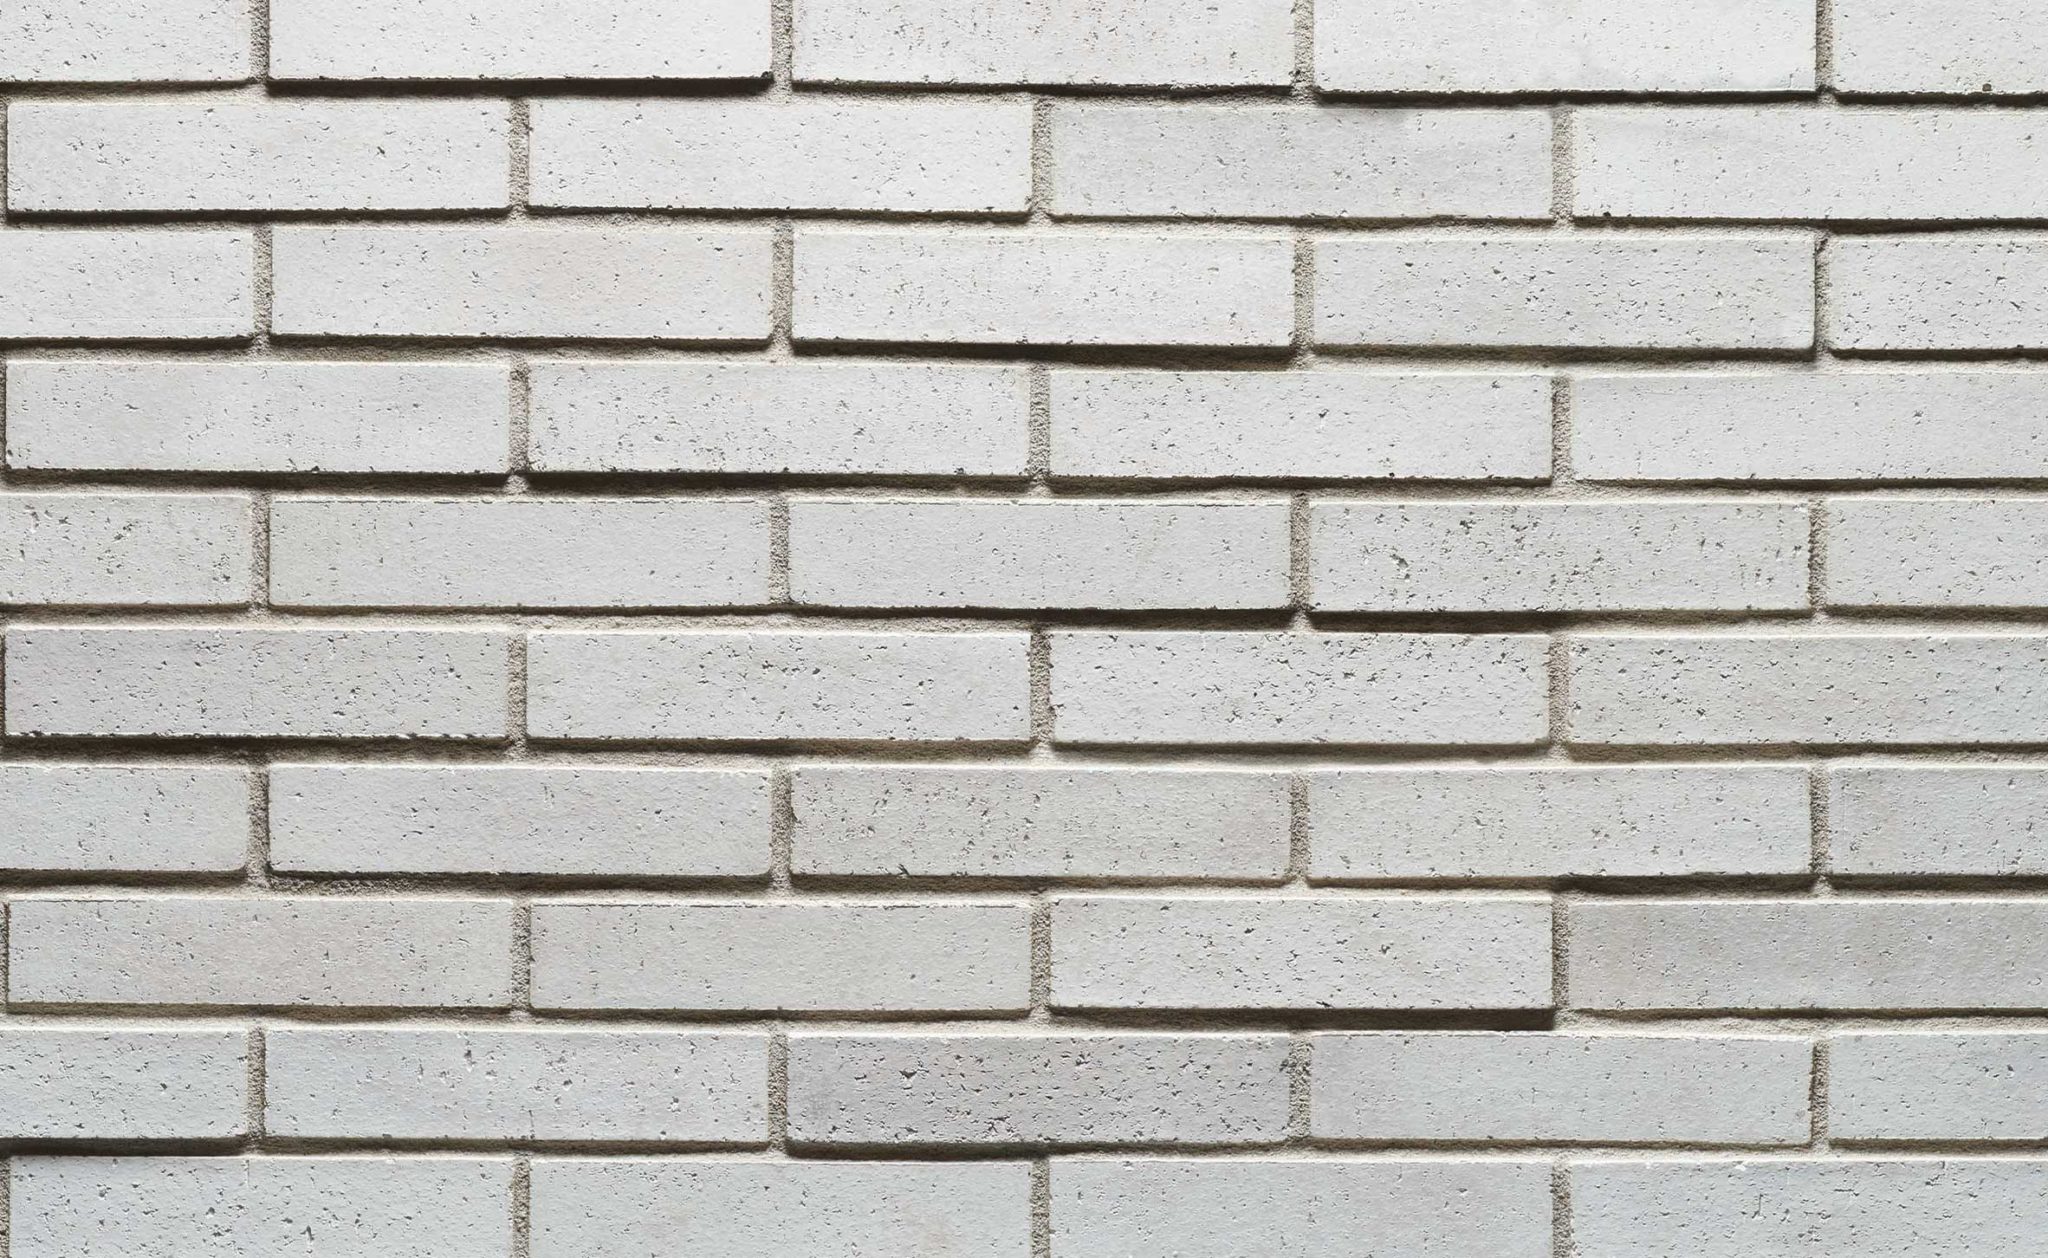 Cultured Stone® - Tenley Brick™, Loften™ with half inch mortar joints